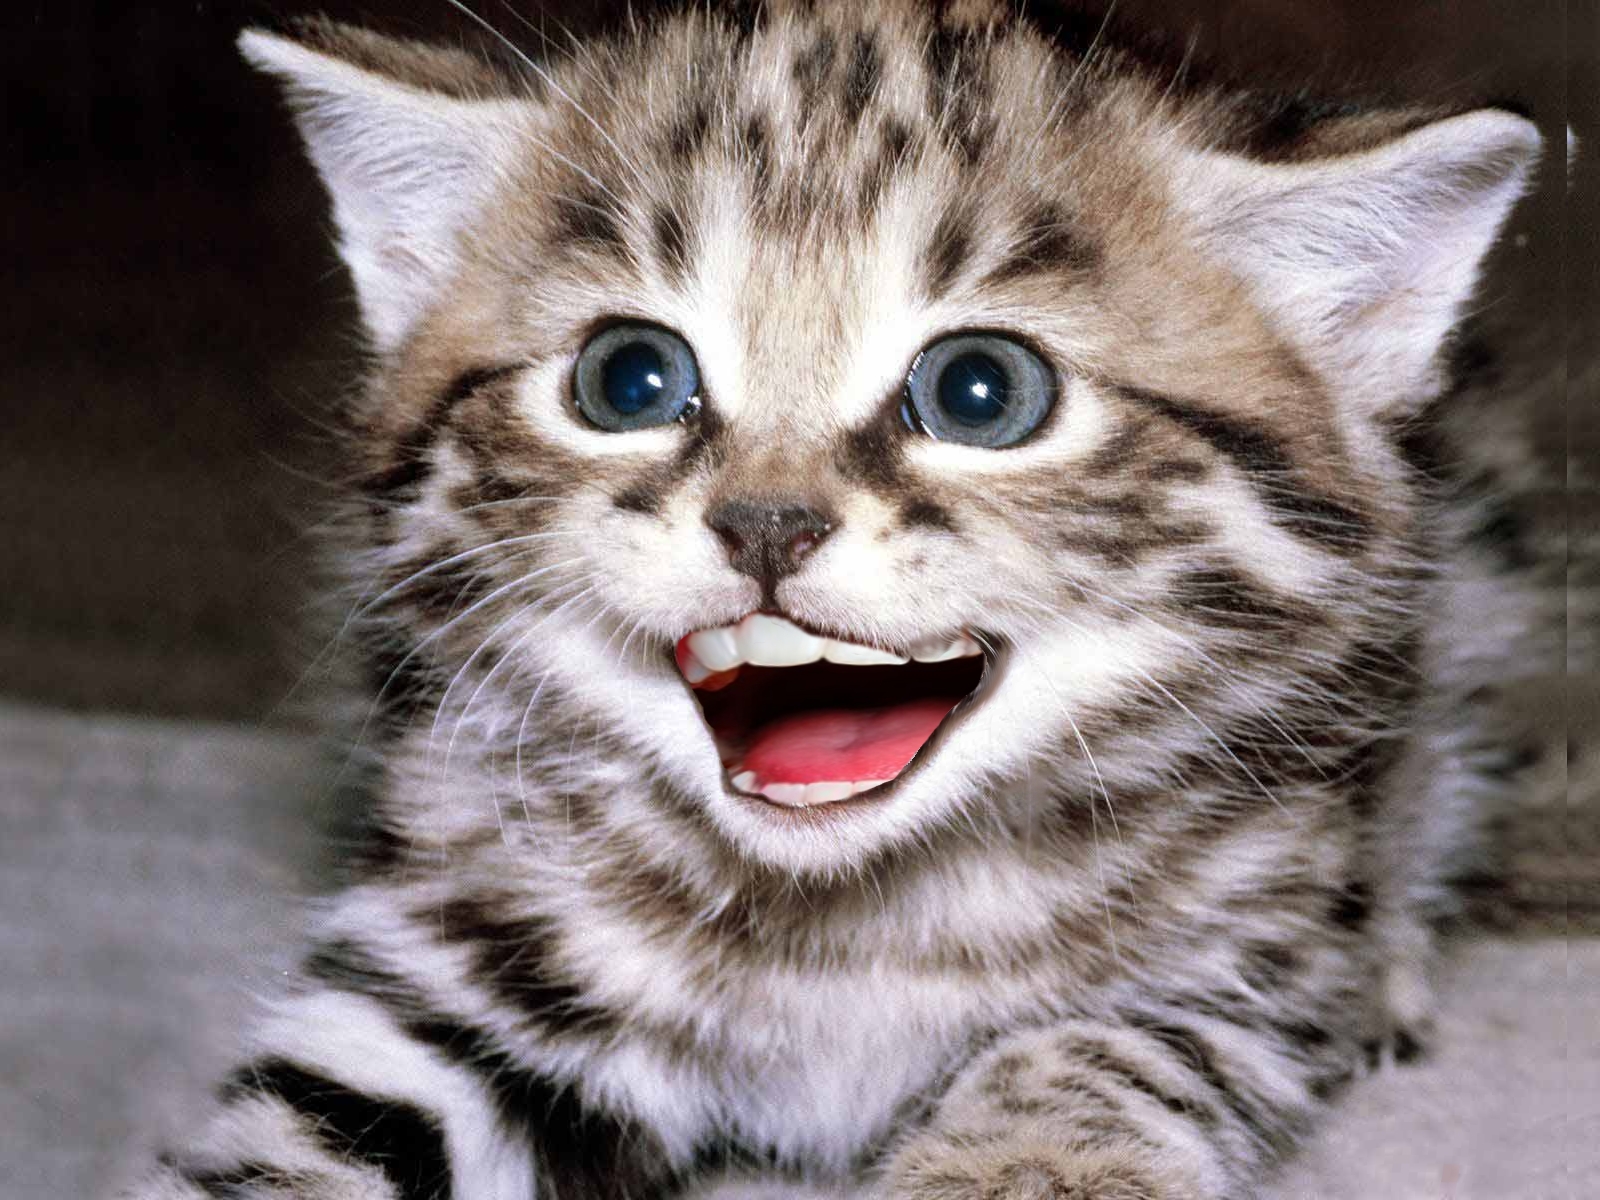 photo shopped  kitten